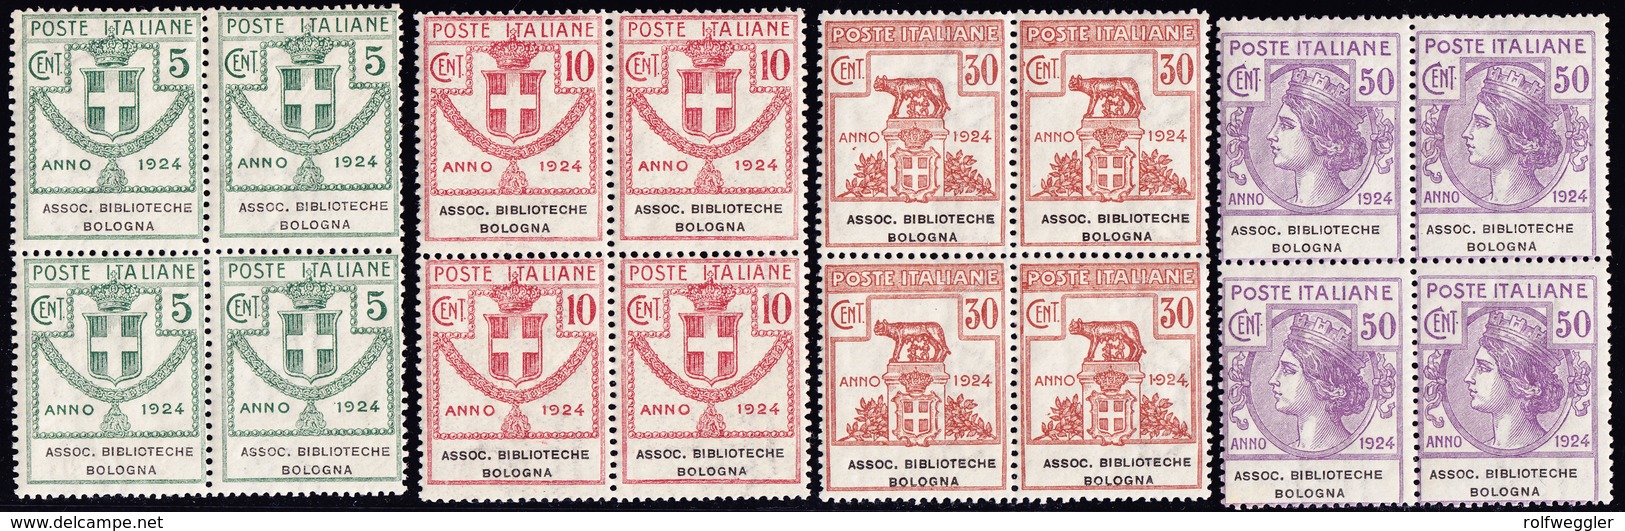 1924 ASSOC. BIBLIOTECHE BOLOGNA 5c-50c Komplette Serie Im 4-er Block; Sas Nr. 1-4; Euro 1550.- - Mandatsgebühr